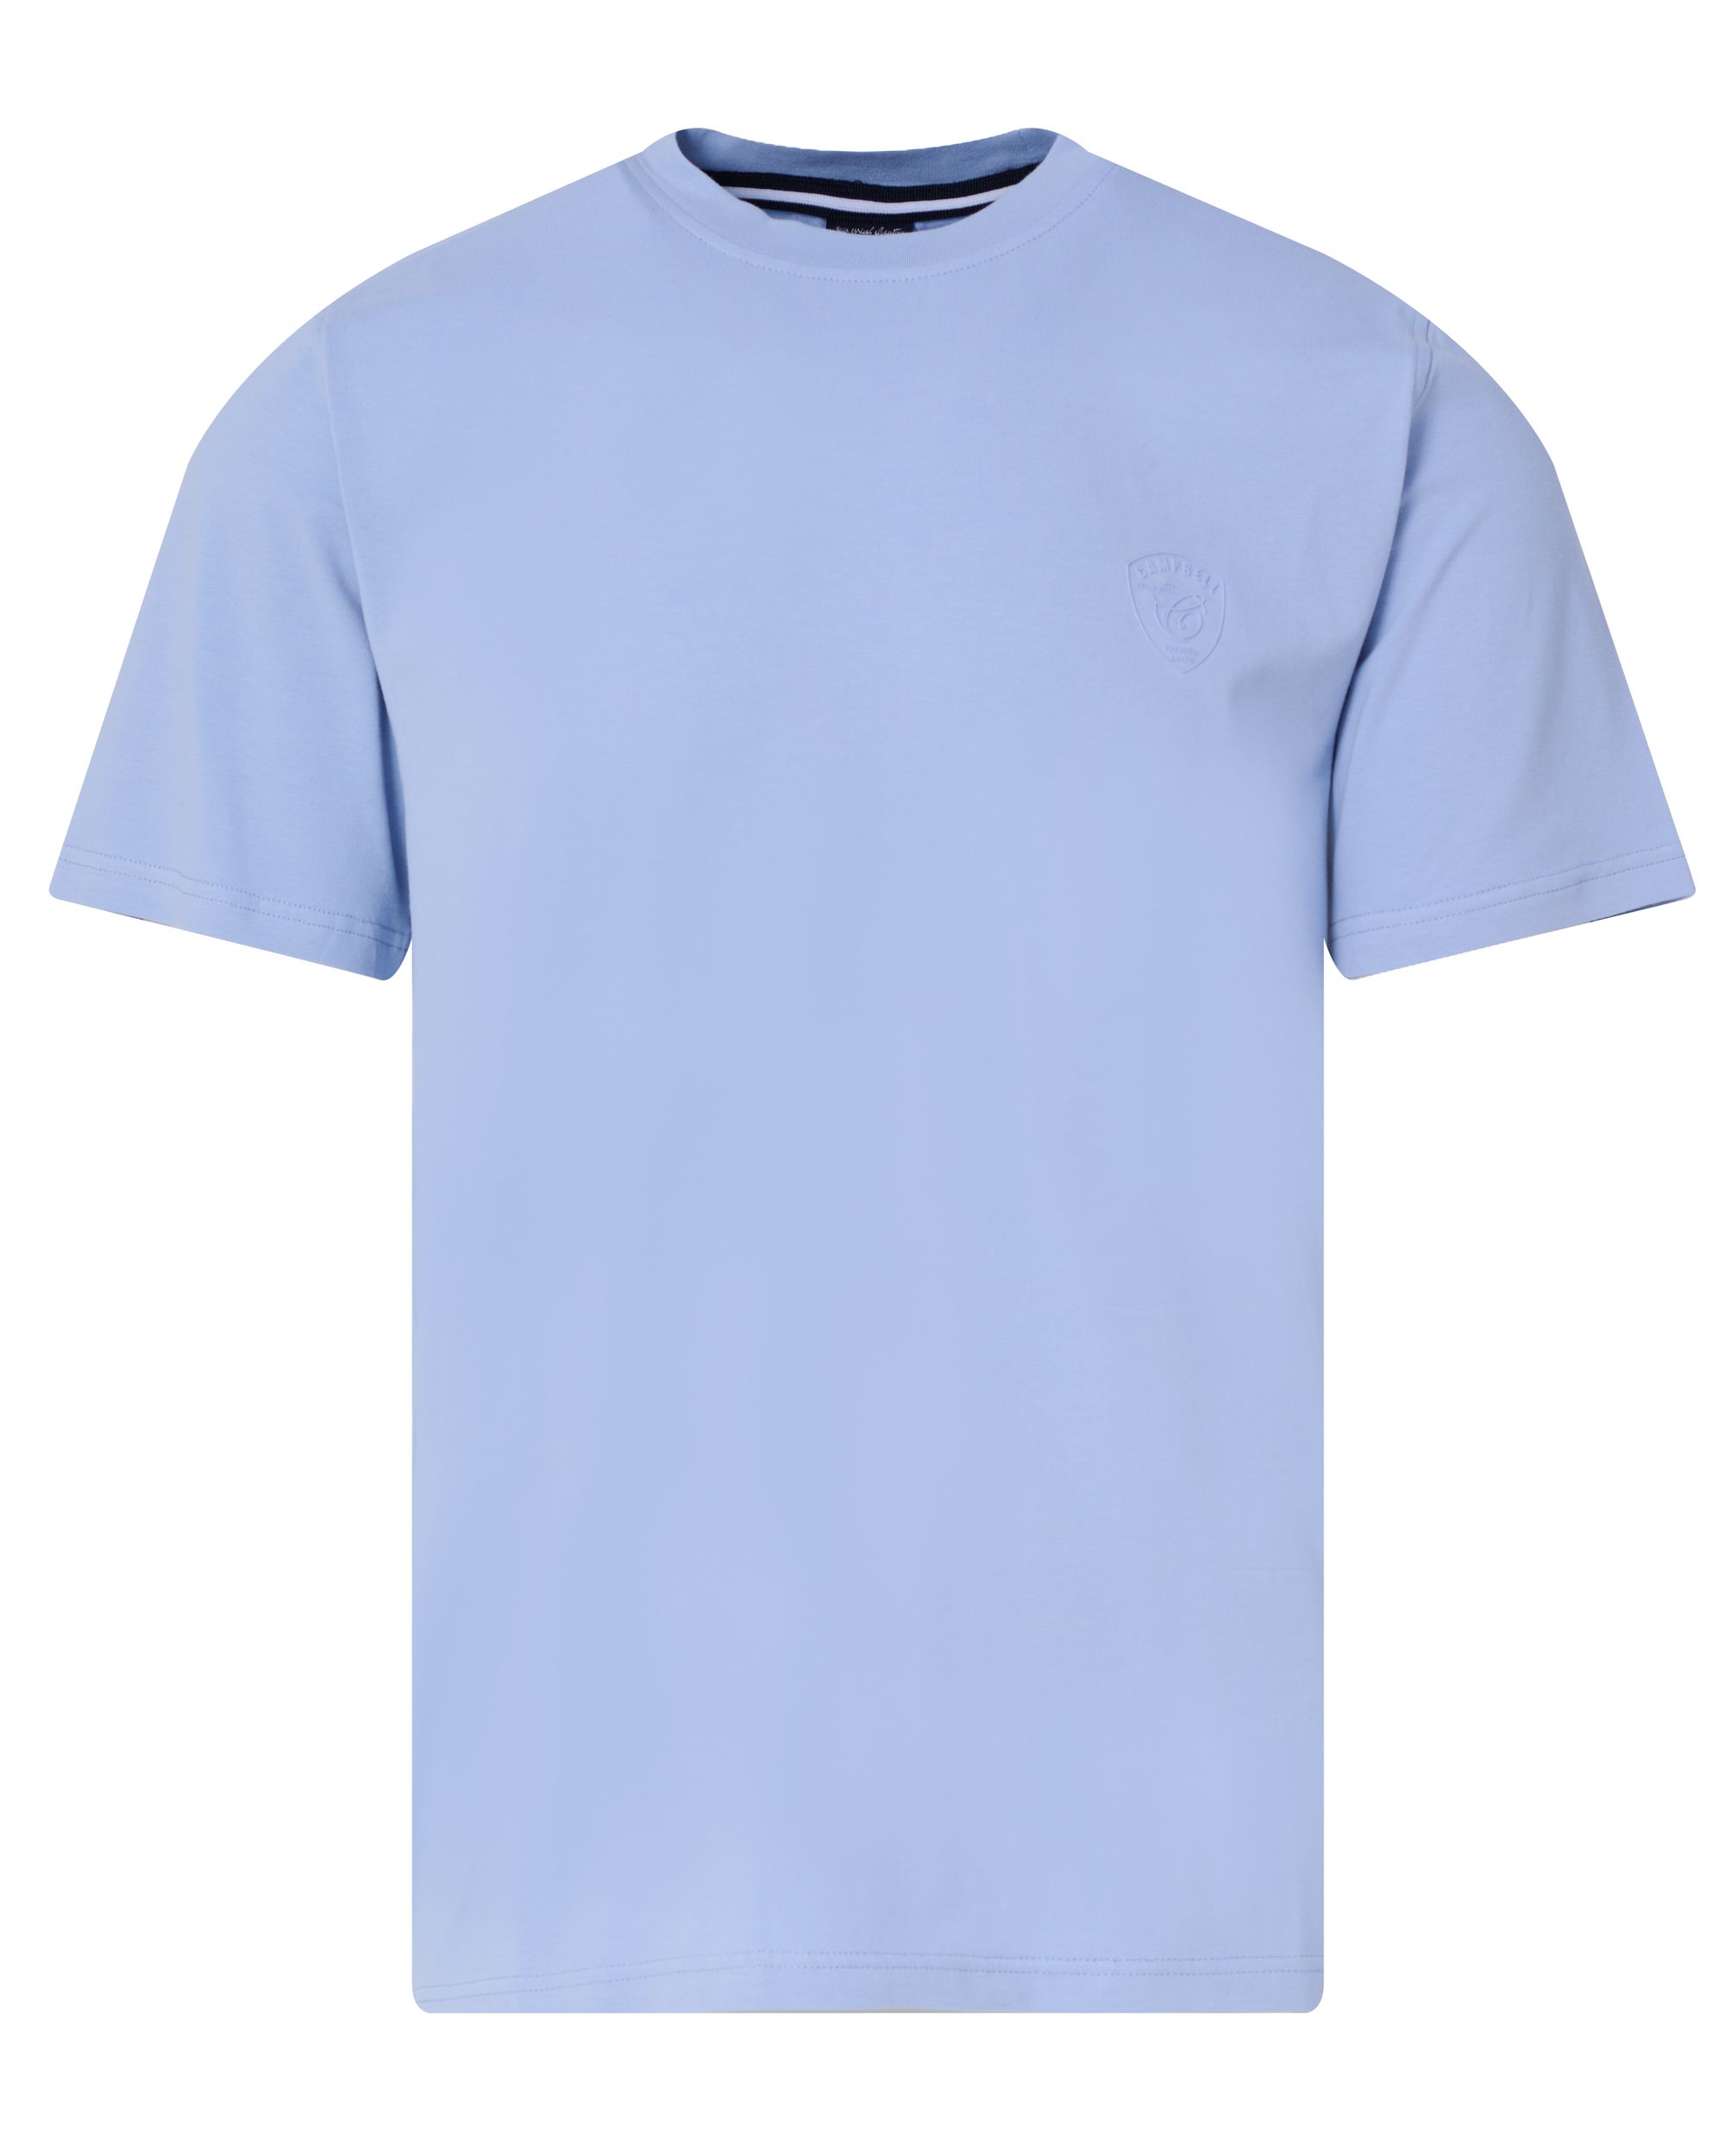 Campbell Classic Soho T-shirt KM Brunnera Blue 081503-005-XXL